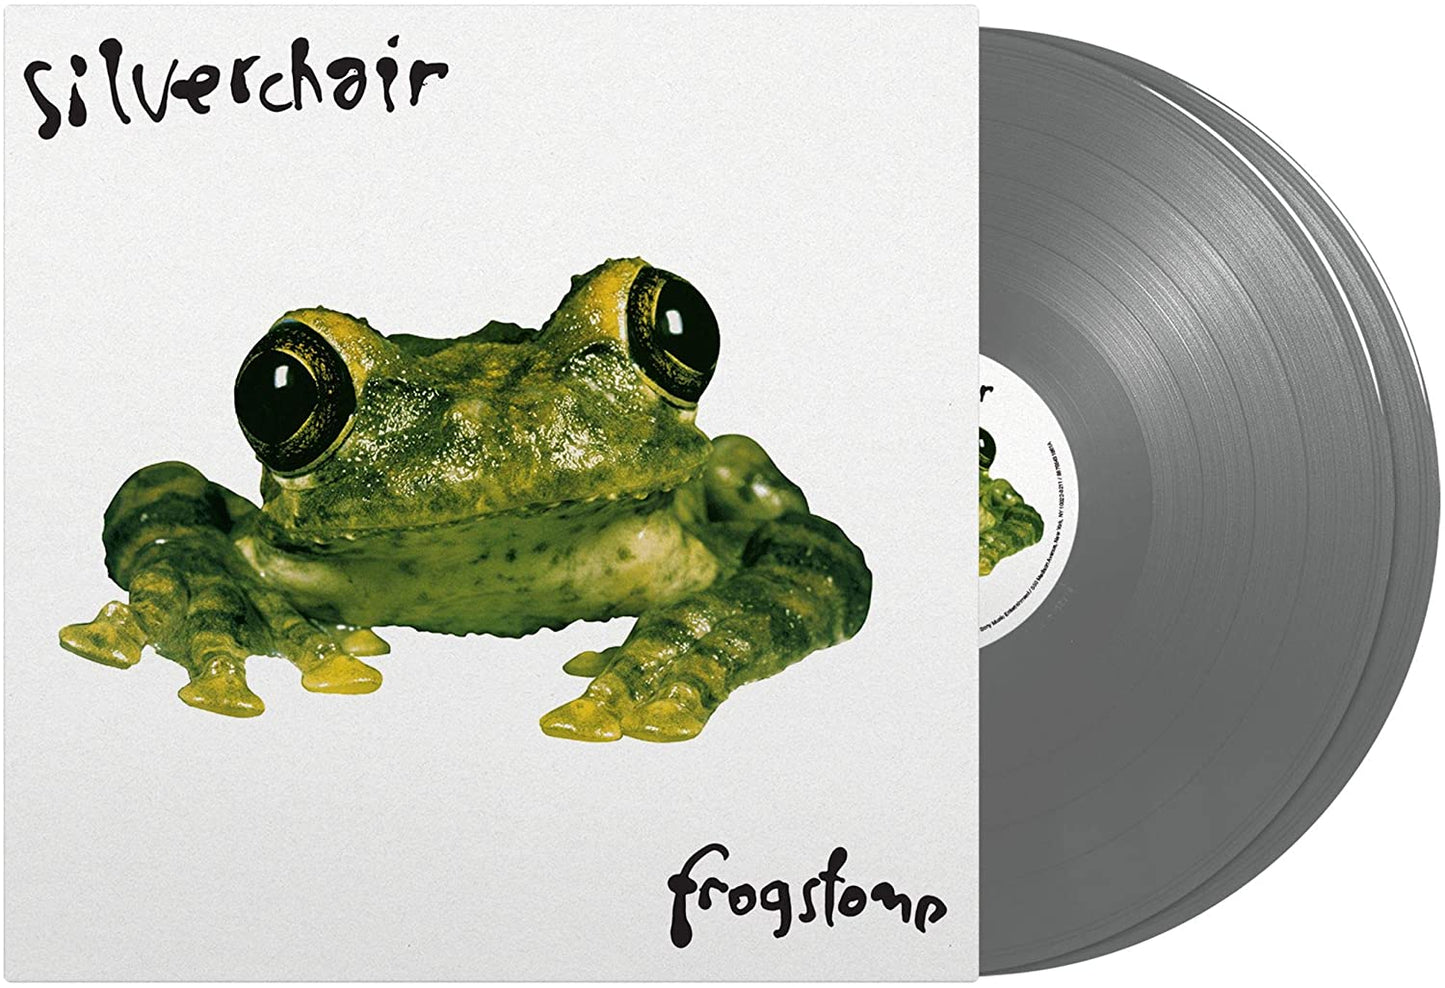 Silverchair - Frogstomp - 2LP